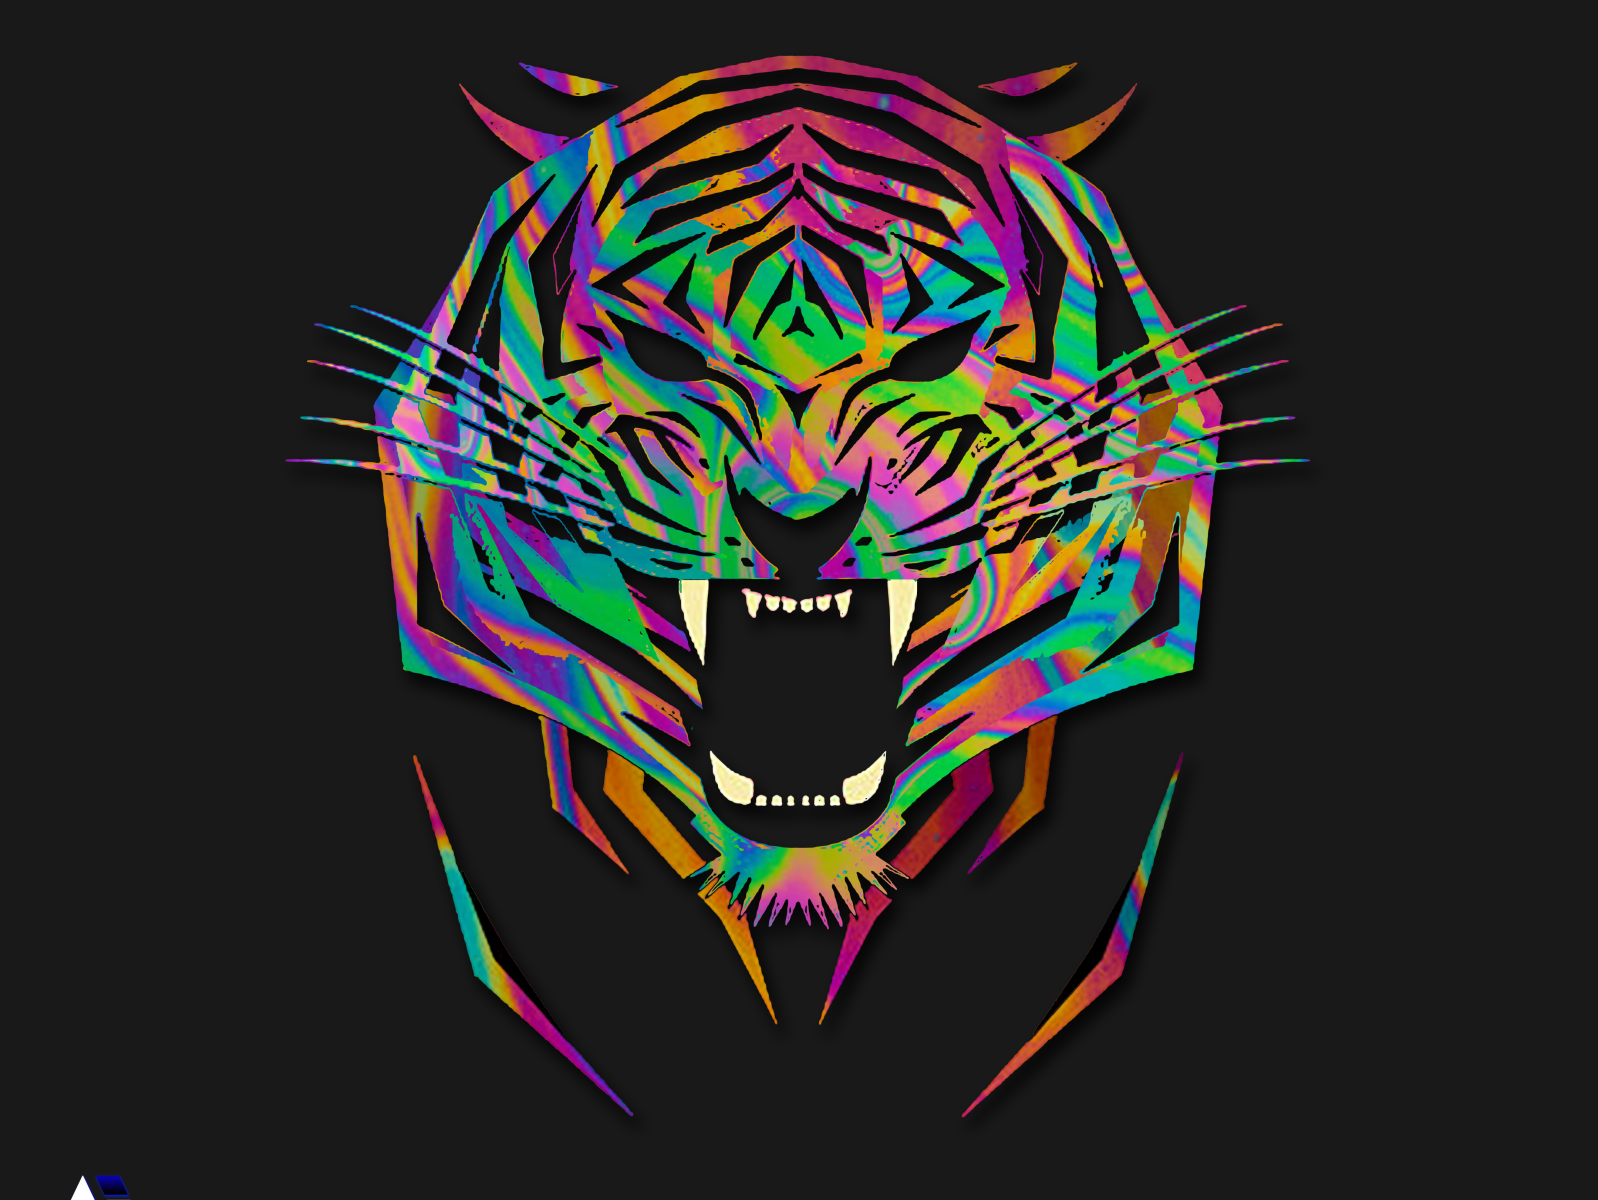 Tiger illustration by alpha illustrations on Dribbble